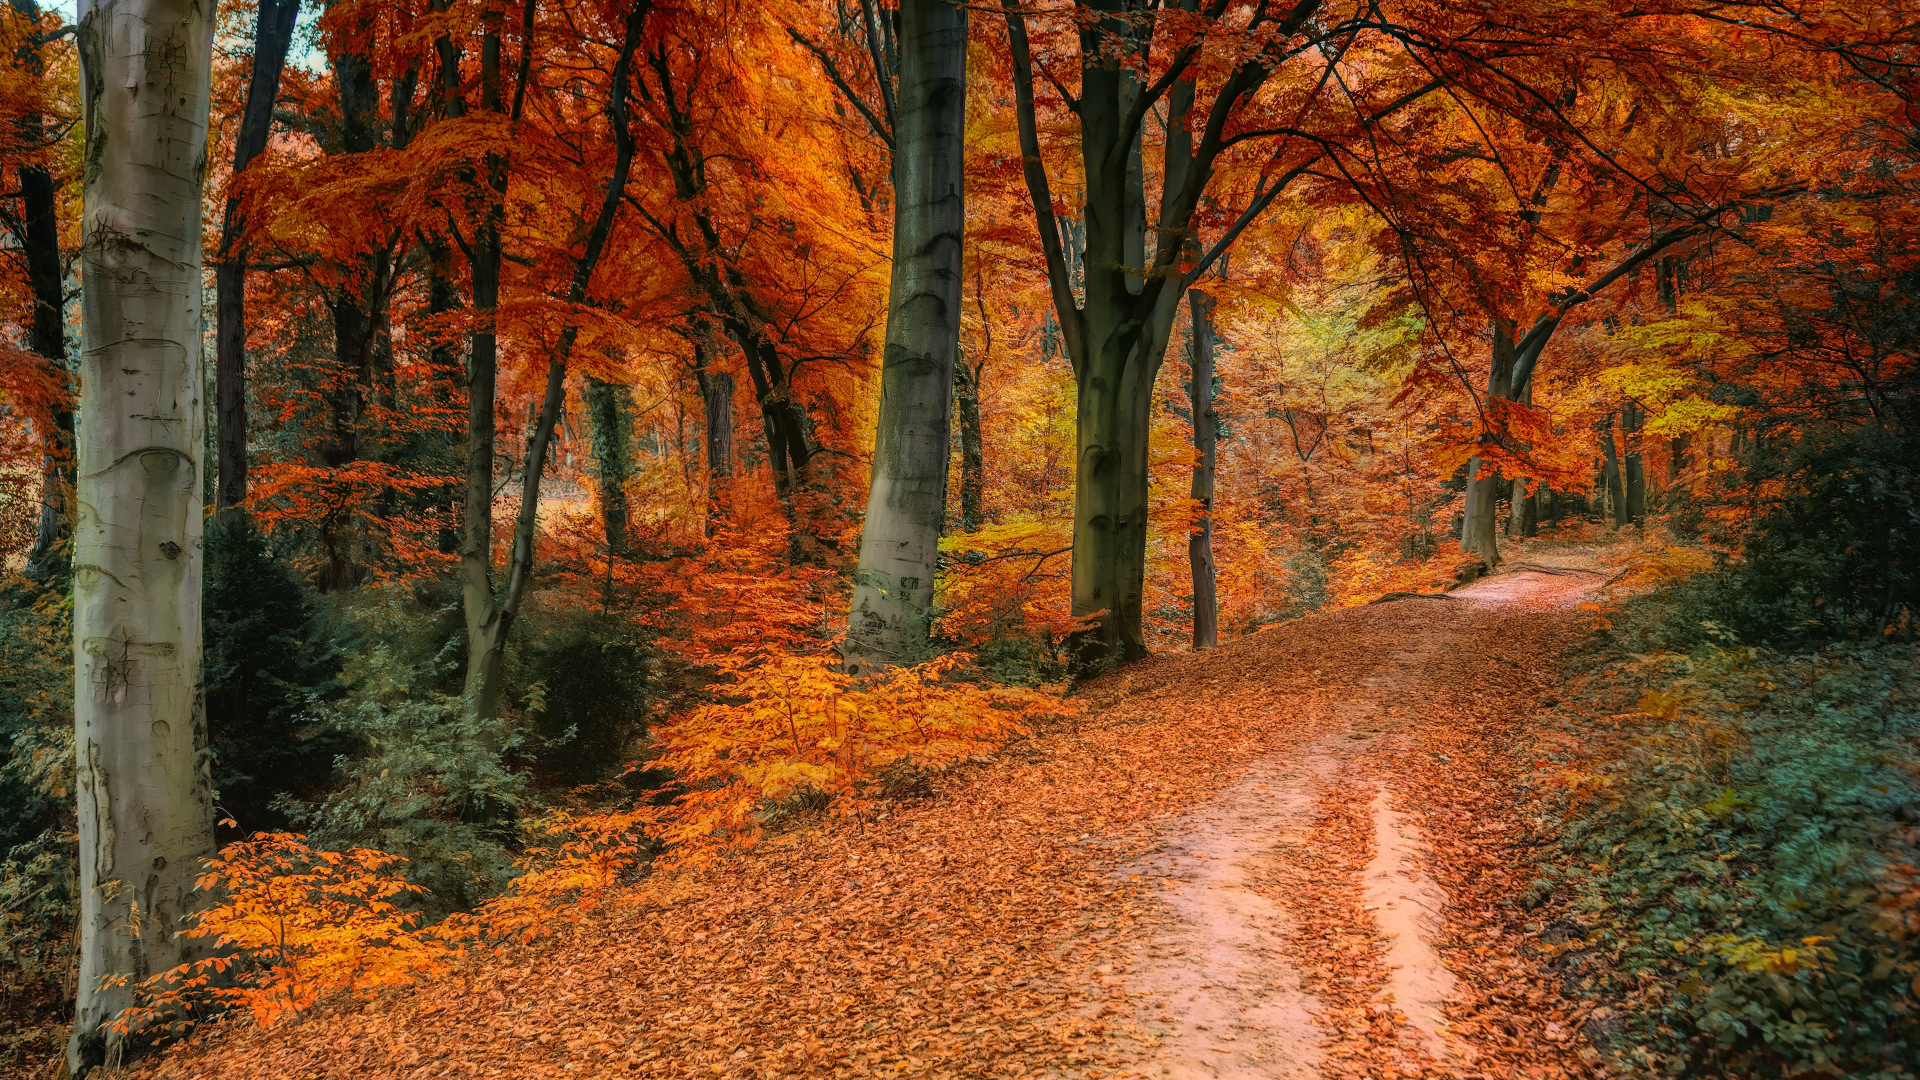 Download wallpaper 1920x1080 autumn, tree, fall, pathway, full hd, hdtv